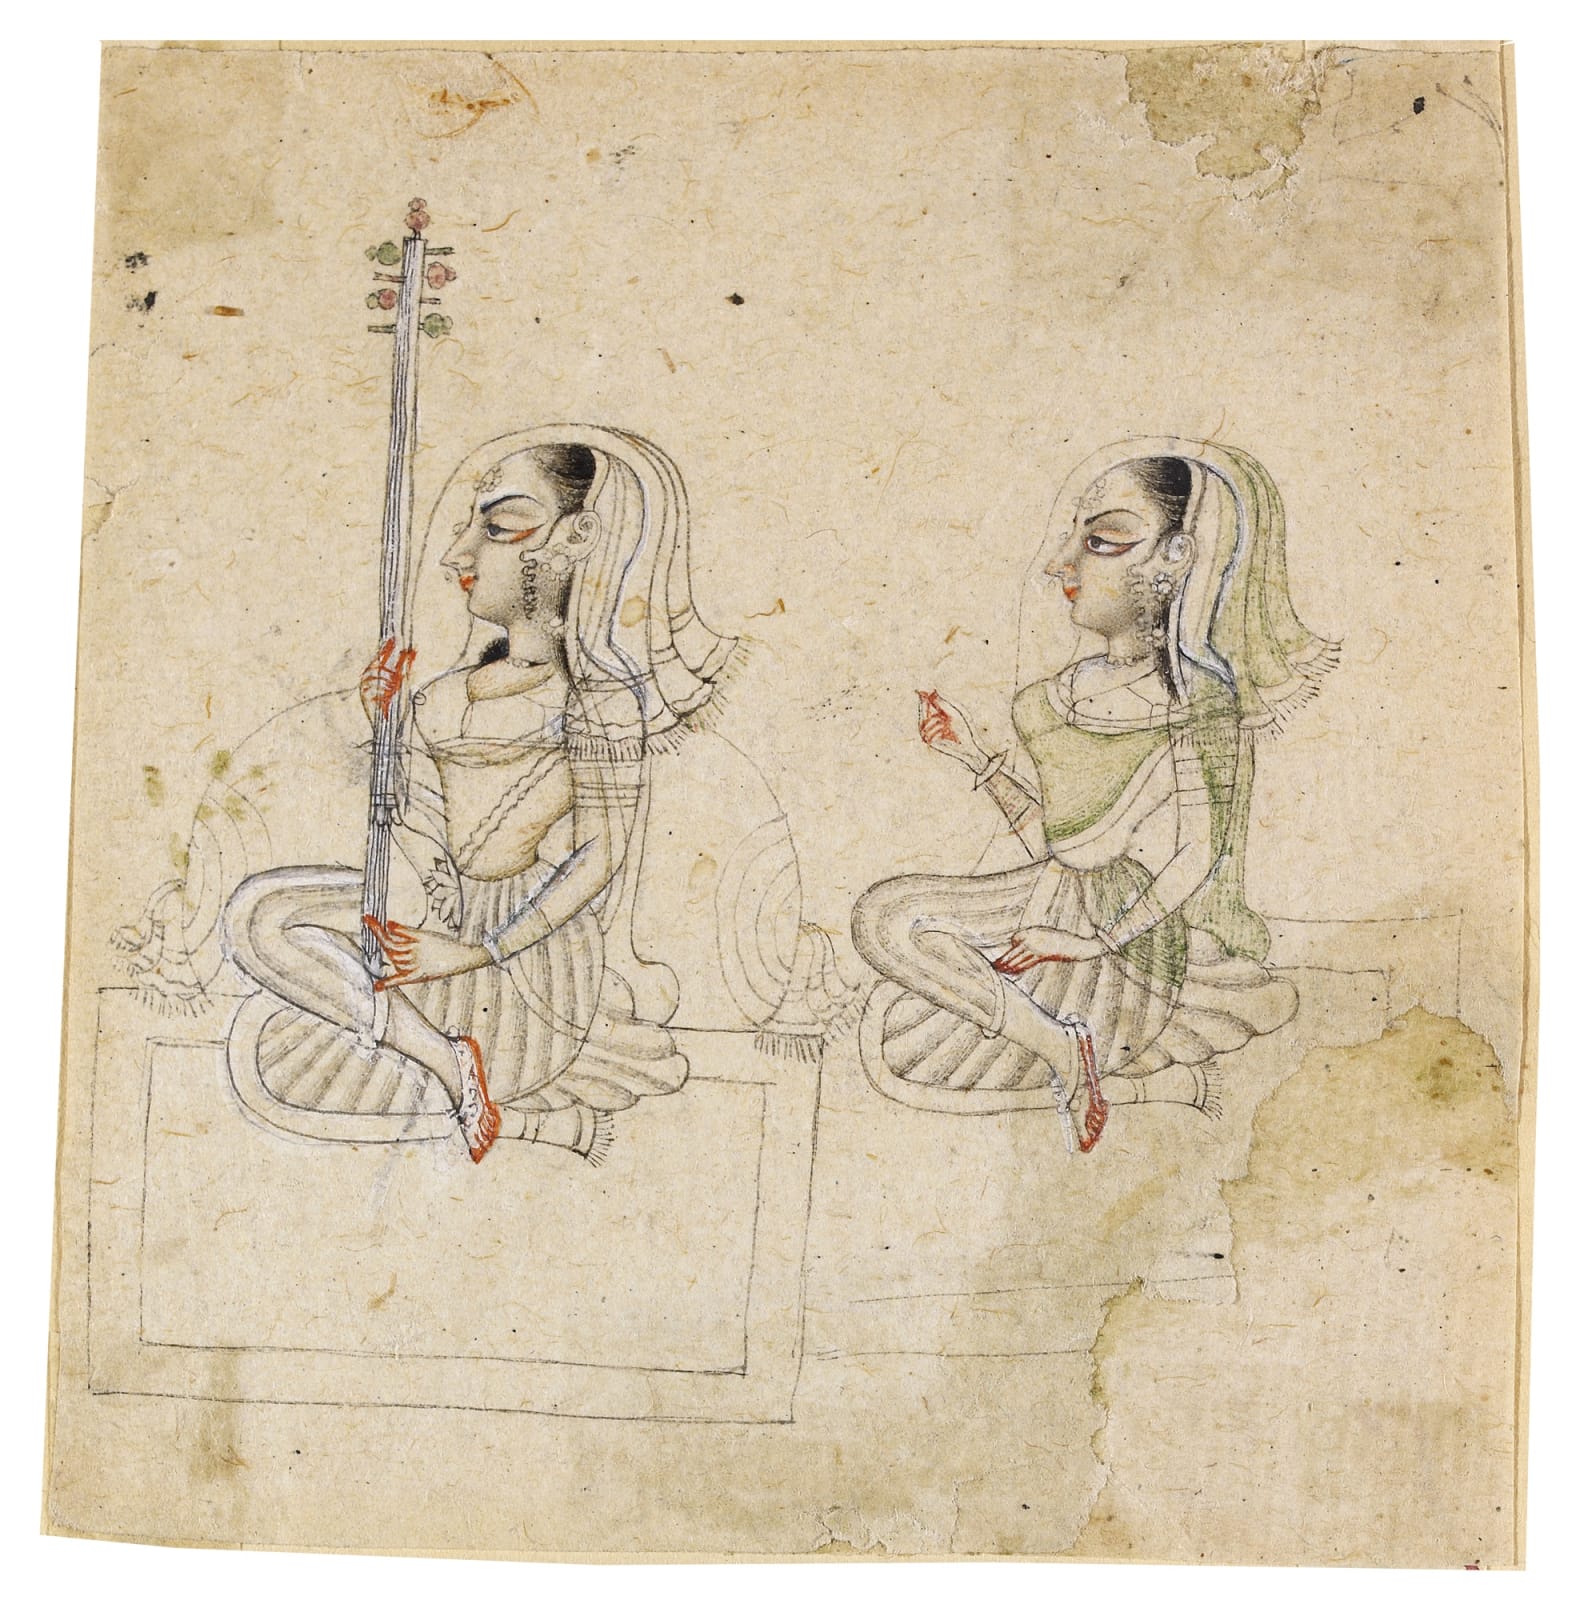 Drawing of two Female Musicians, Kishangarh, c. 1790-1800